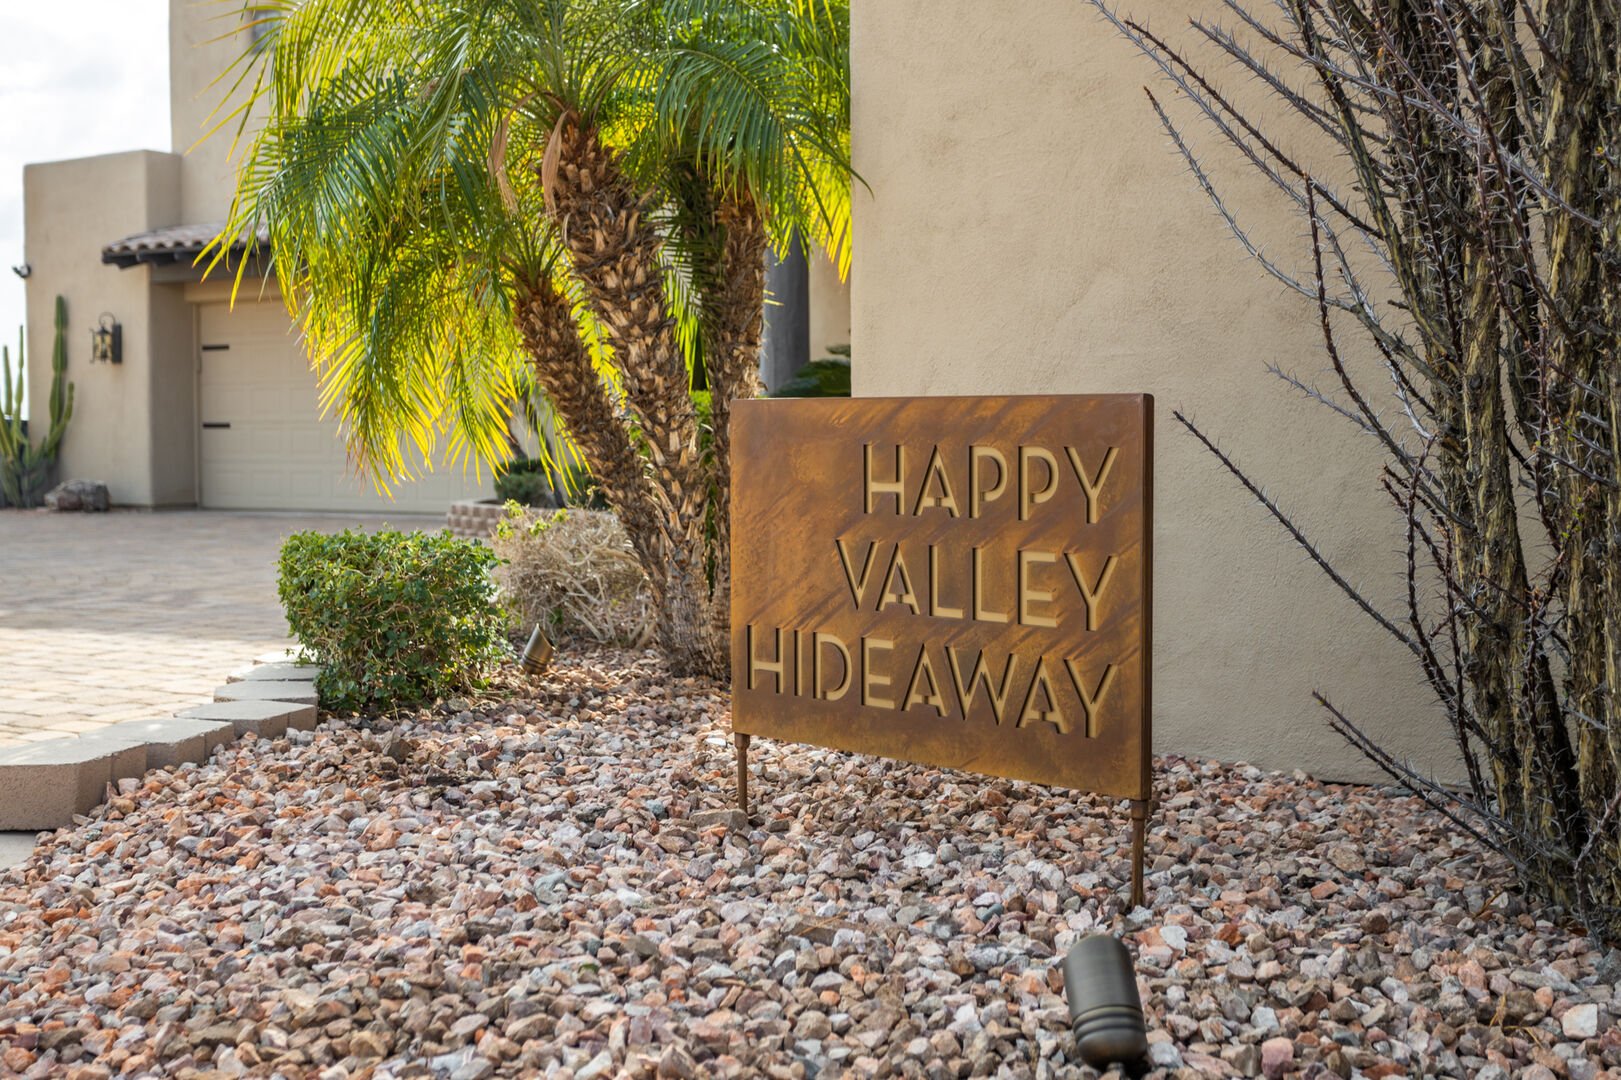 Enjoy Happy Valley Hideaway!